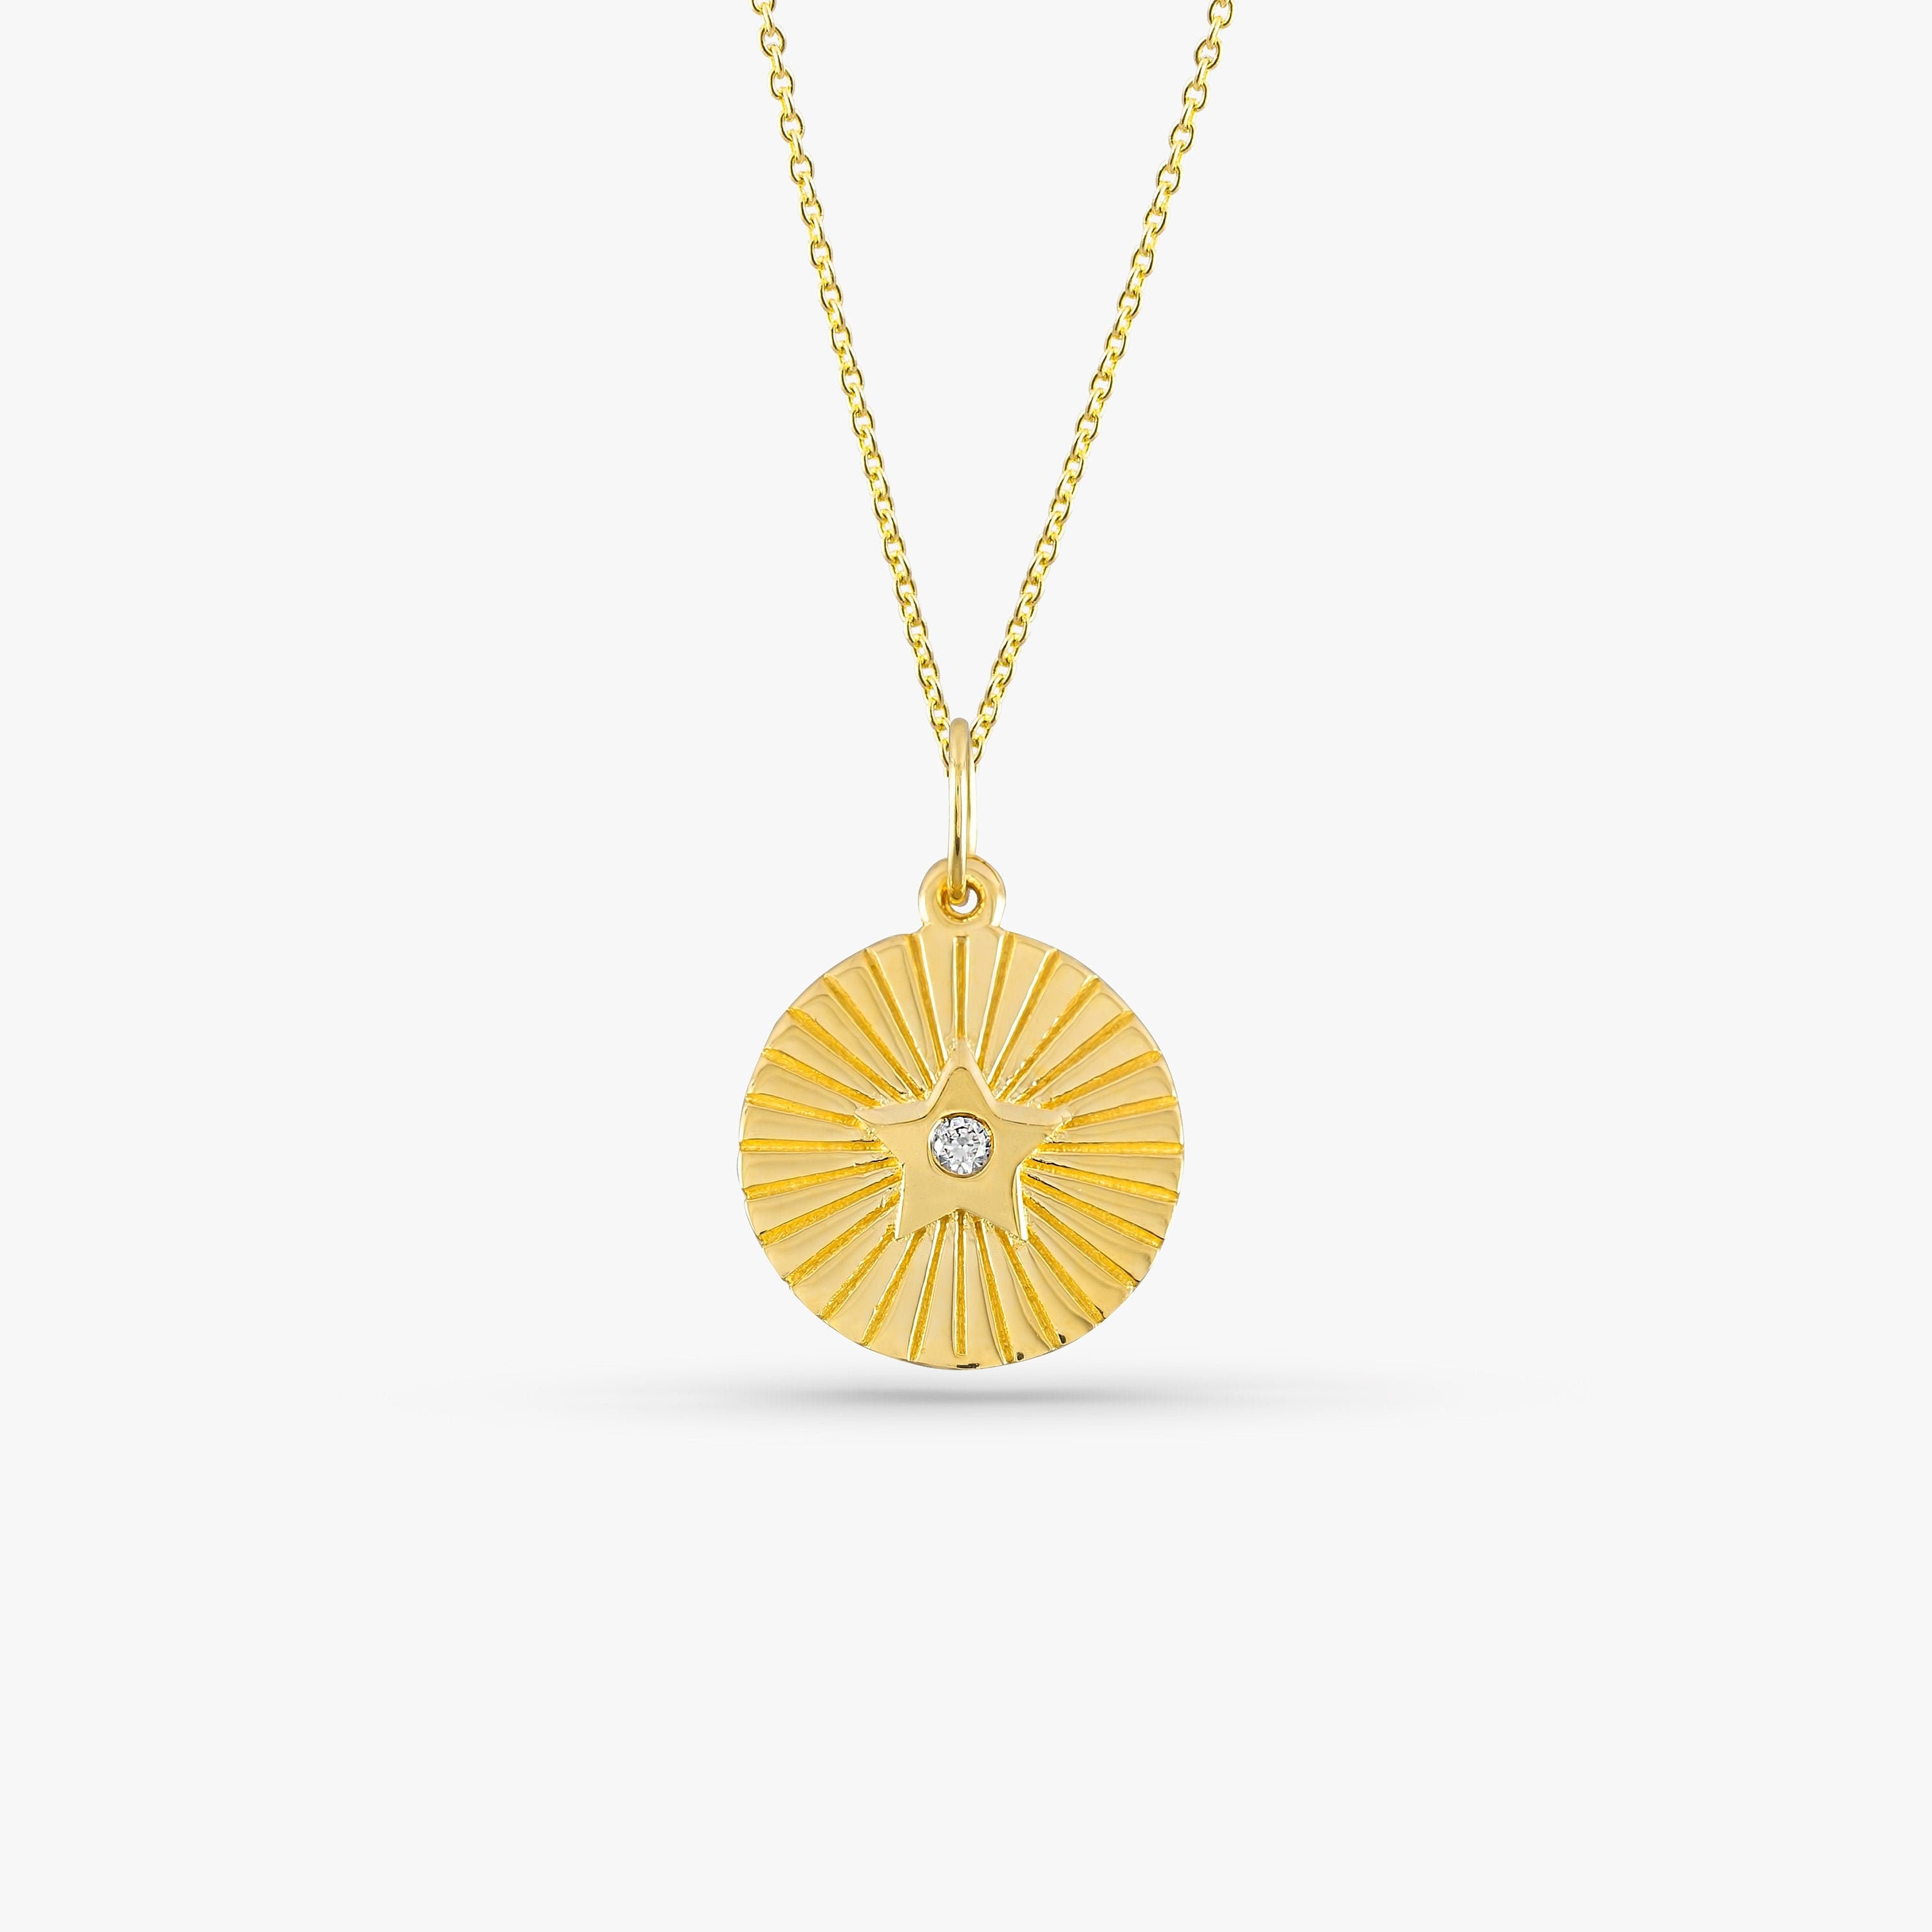 Diamond Star Pendant Necklace in 14K Gold